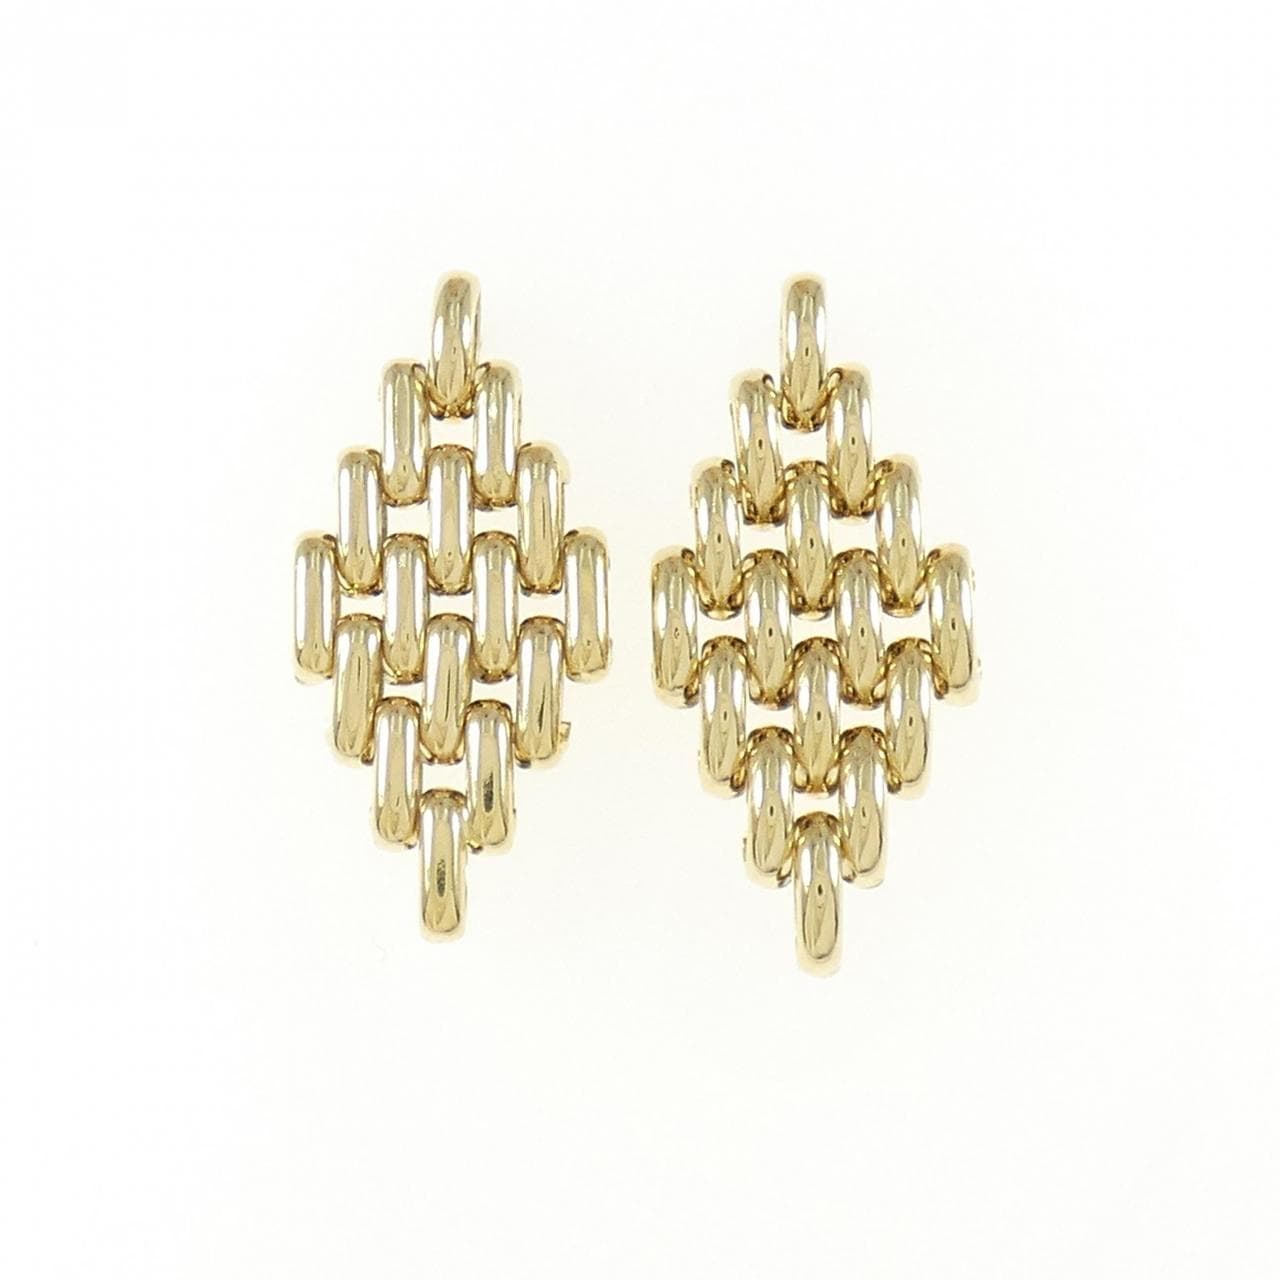 750YG/K18YG earrings